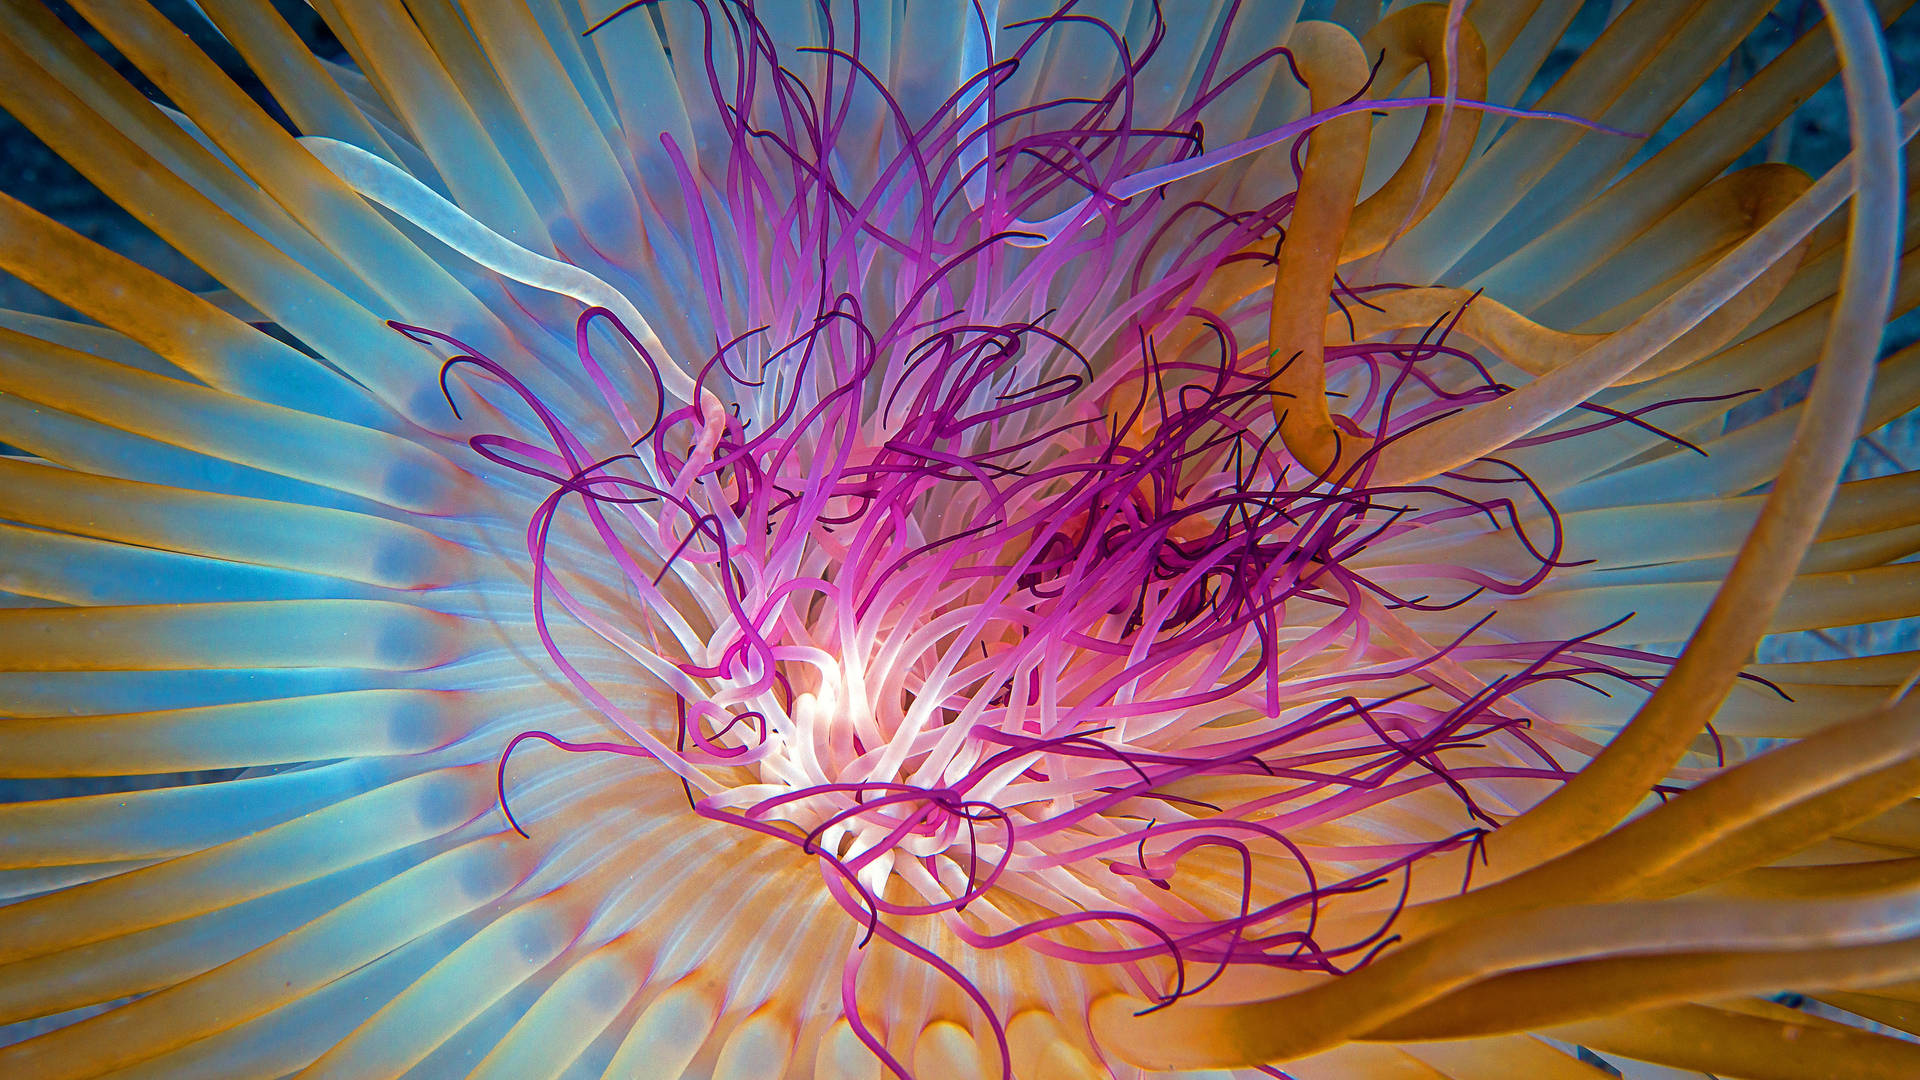 5khd Manetstentakler (jellyfish Tentacles) Wallpaper